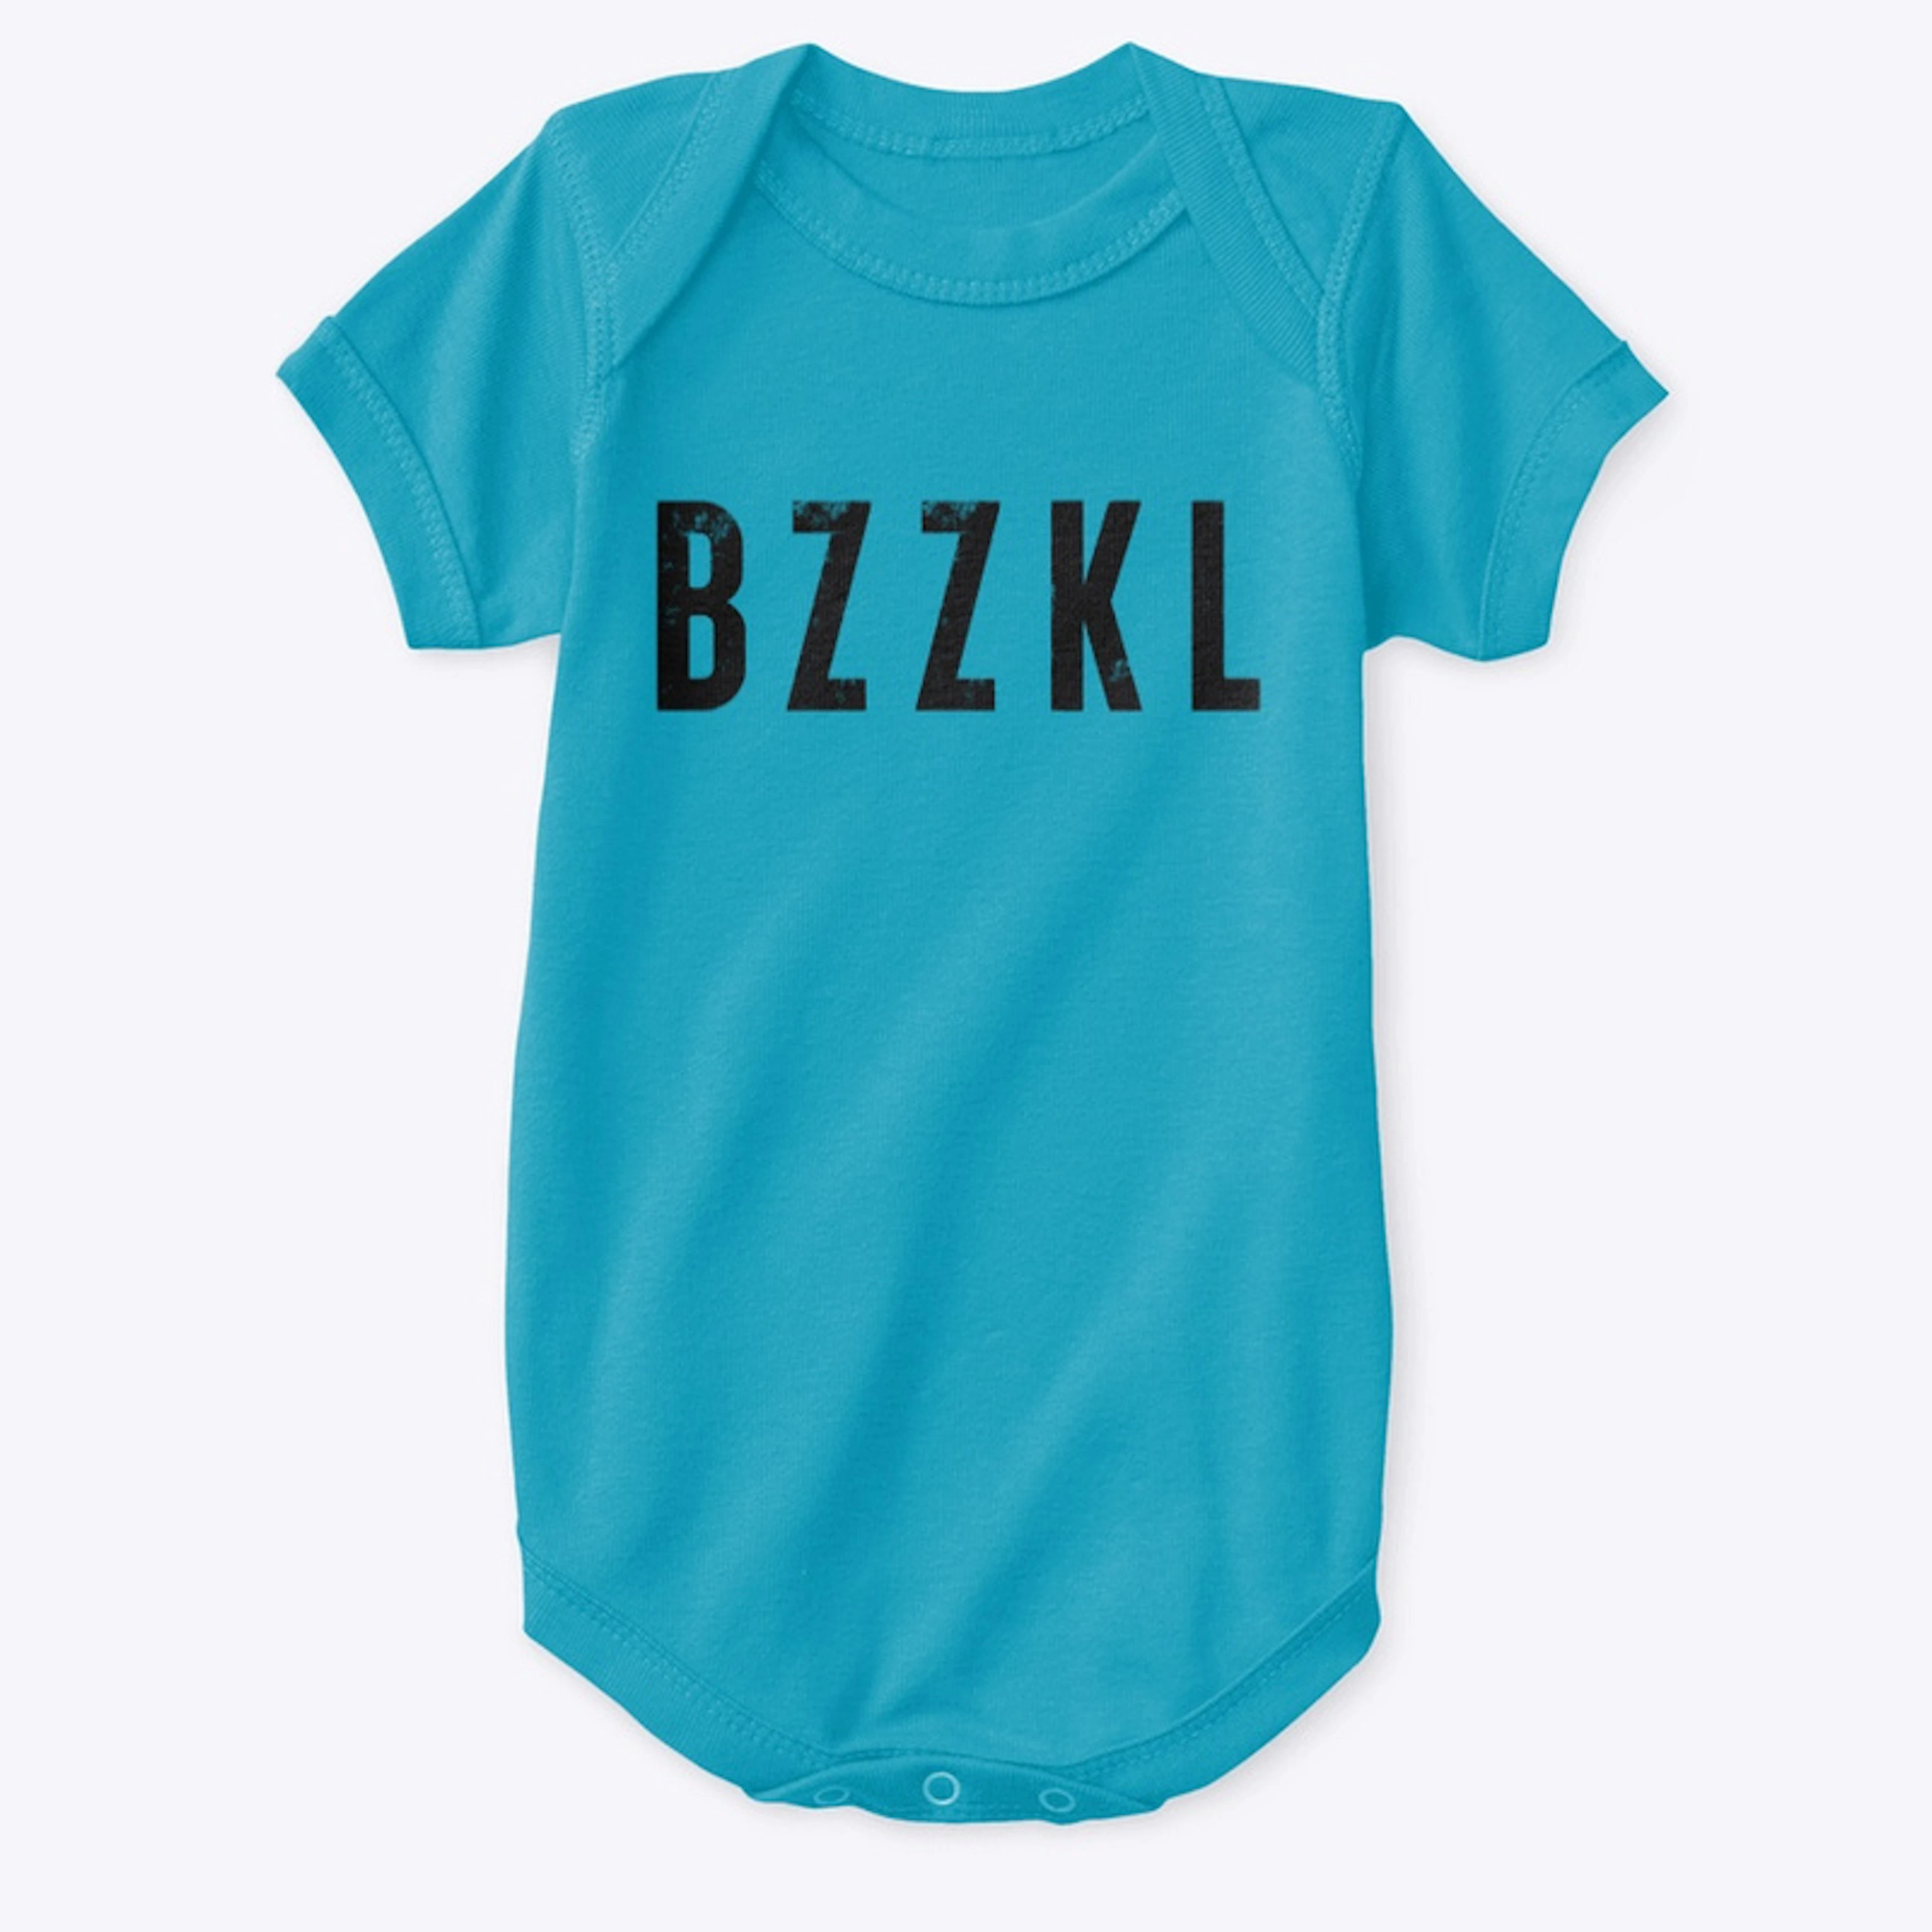 BZZKL Baby Onesie! (Black Logo)